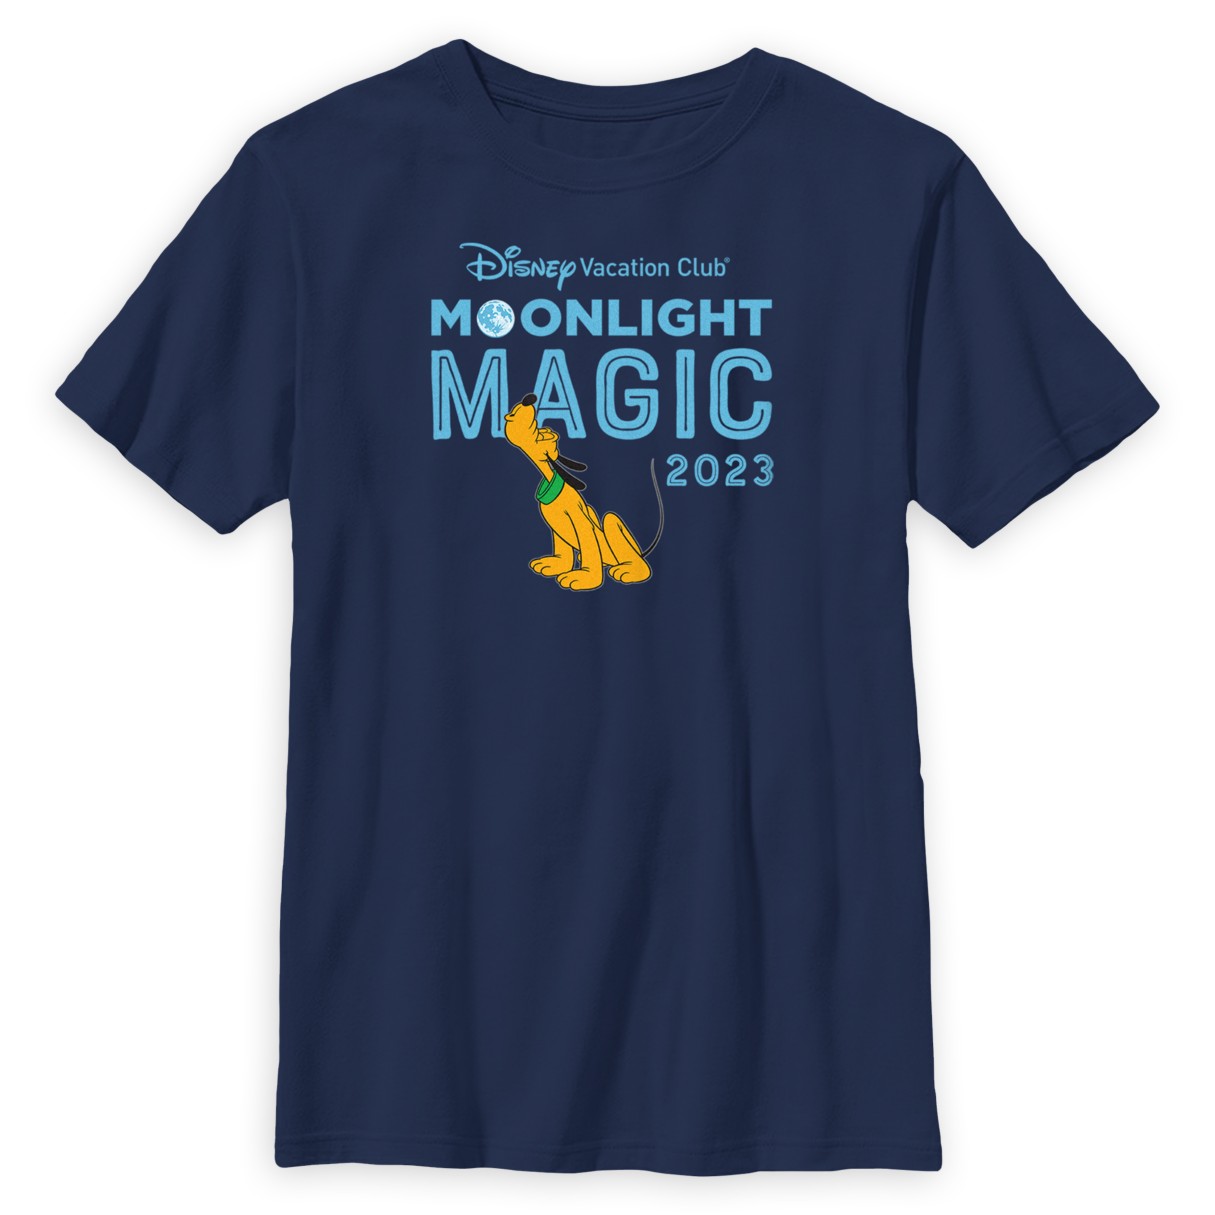 Disney Vacation Club Moonlight Magic 2023 T-Shirt for Kids